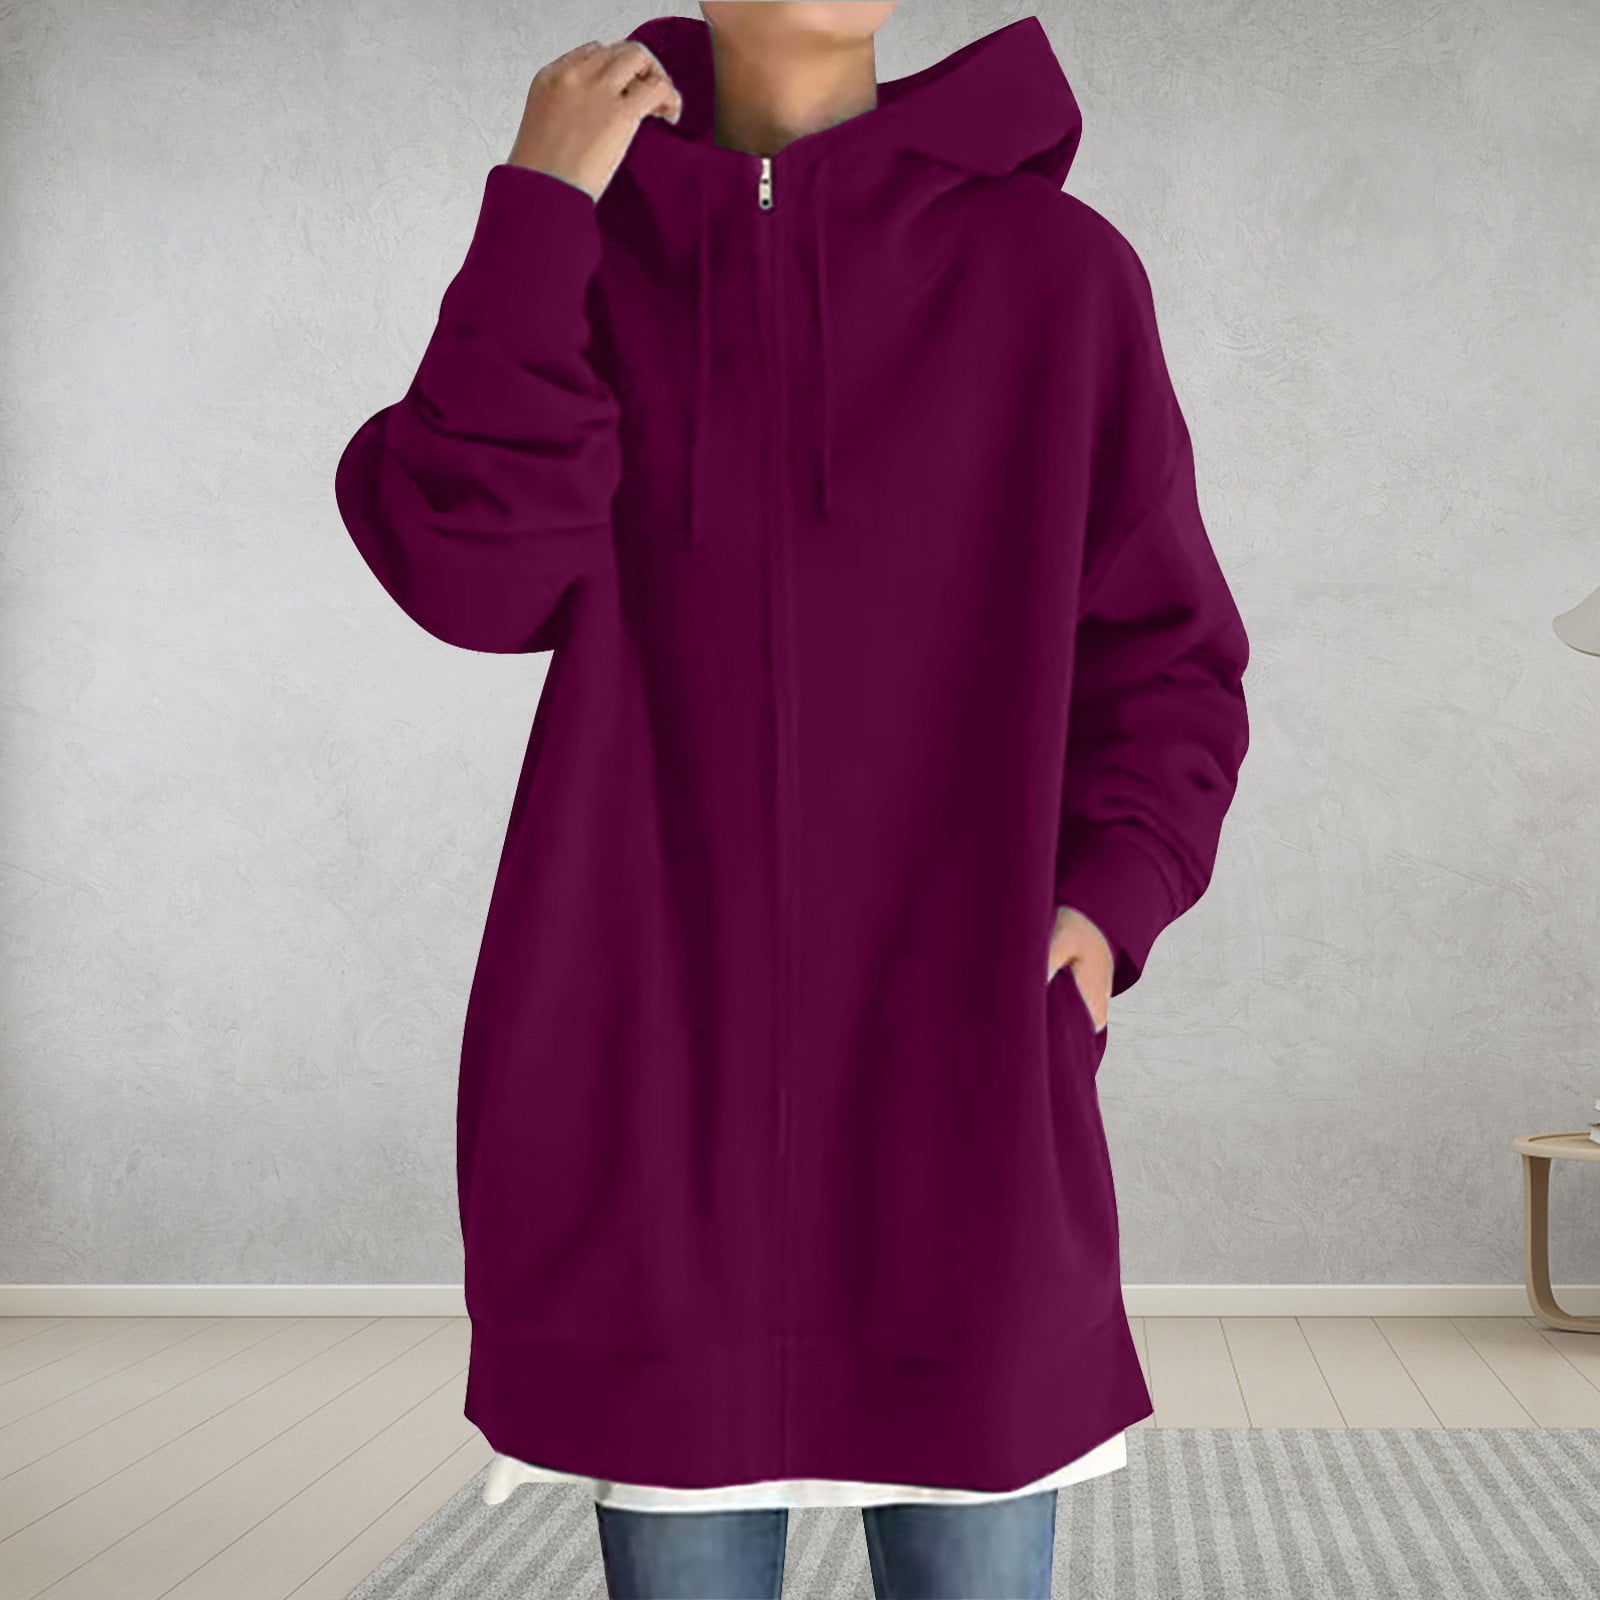 NWQKYZGH Women Coats Women'S Solid Color Hoodie Zipper Long Sleeve  Sweatshirts Long Coat Tops with Pockets Flash Picks Hot Pink 12(Xxl)